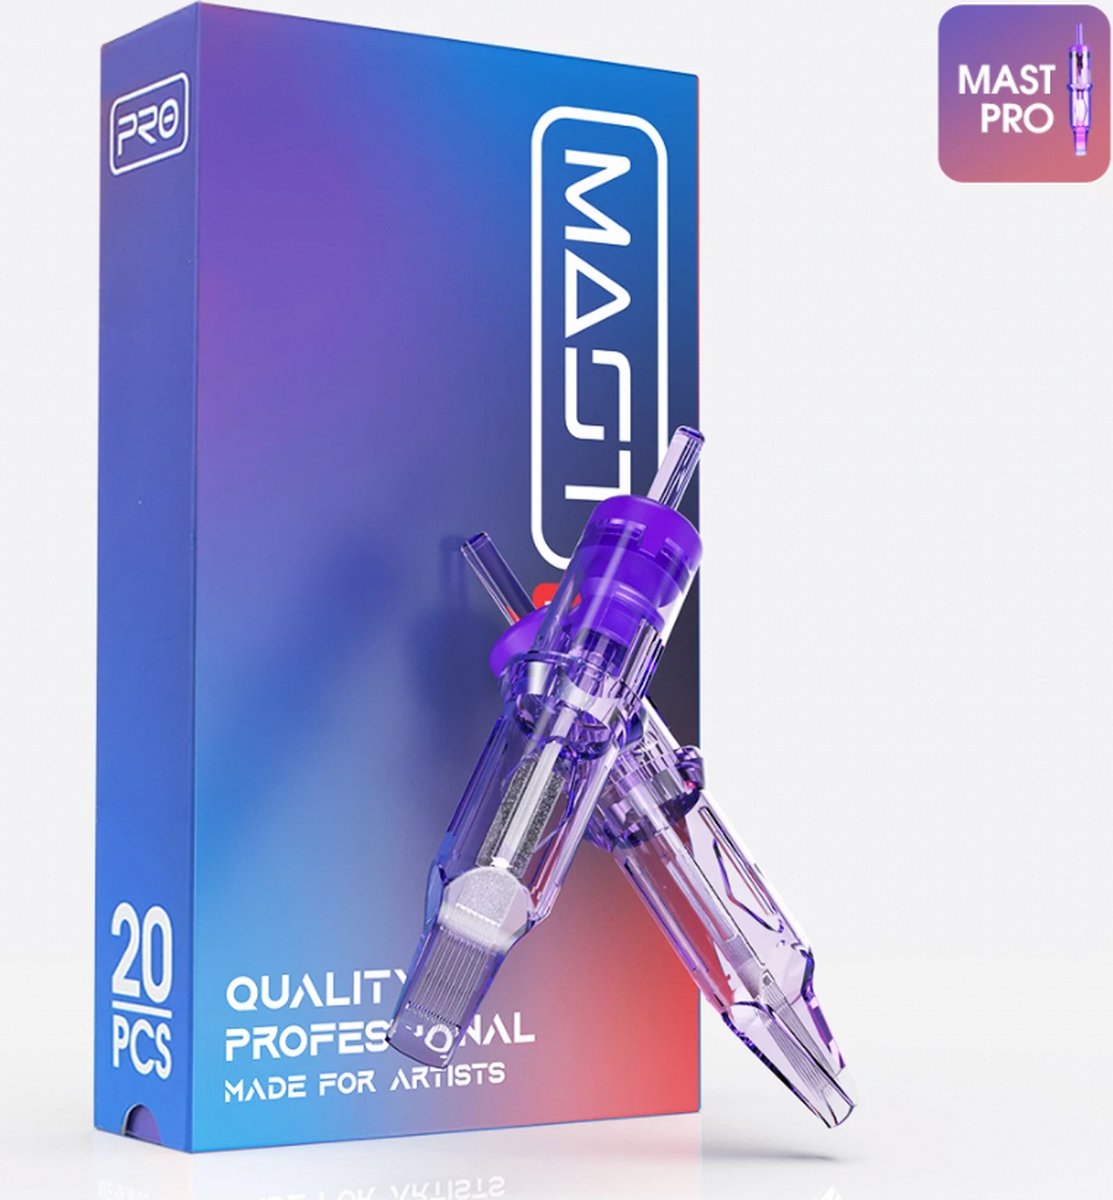 Mast Pro needle - 1 RL 0.40 (powderbrows) - PMU naald - PMU needle brows & lip